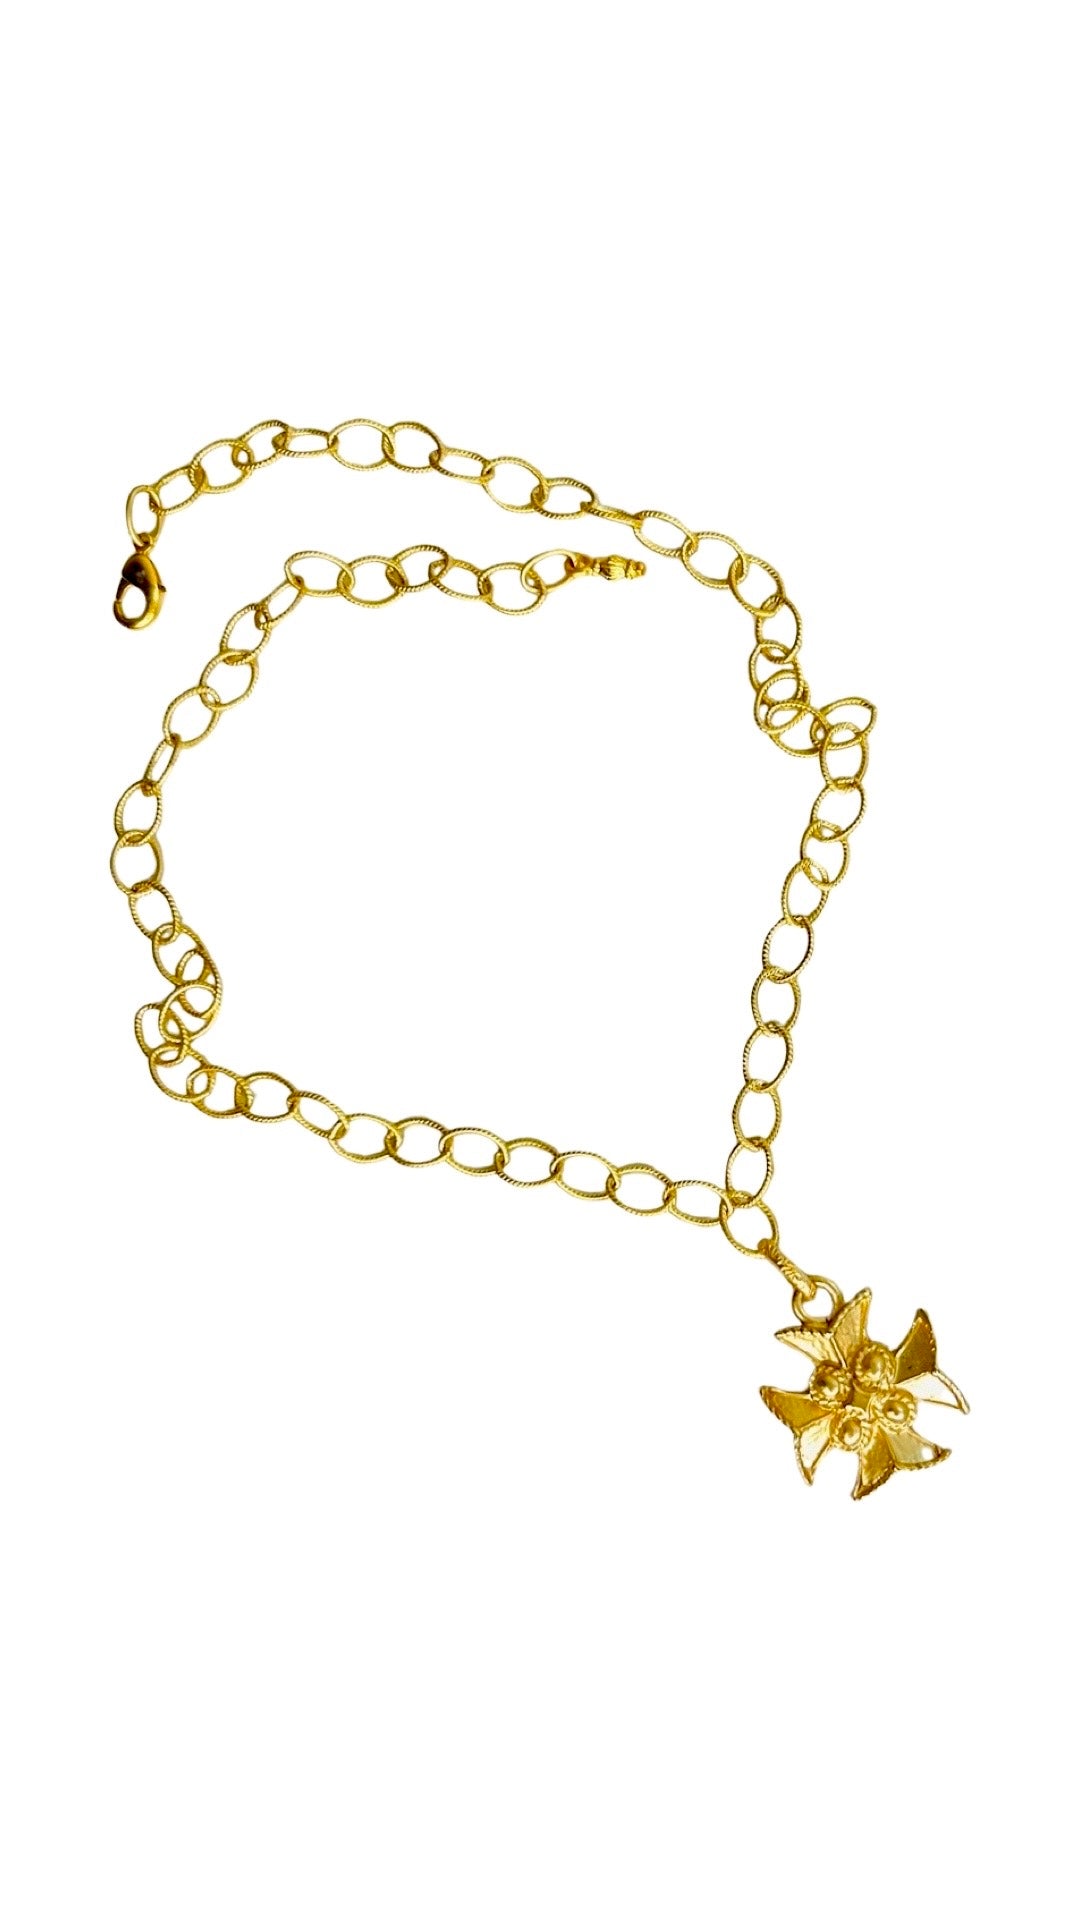 Templar Matte Gold Cross Pendant Necklace